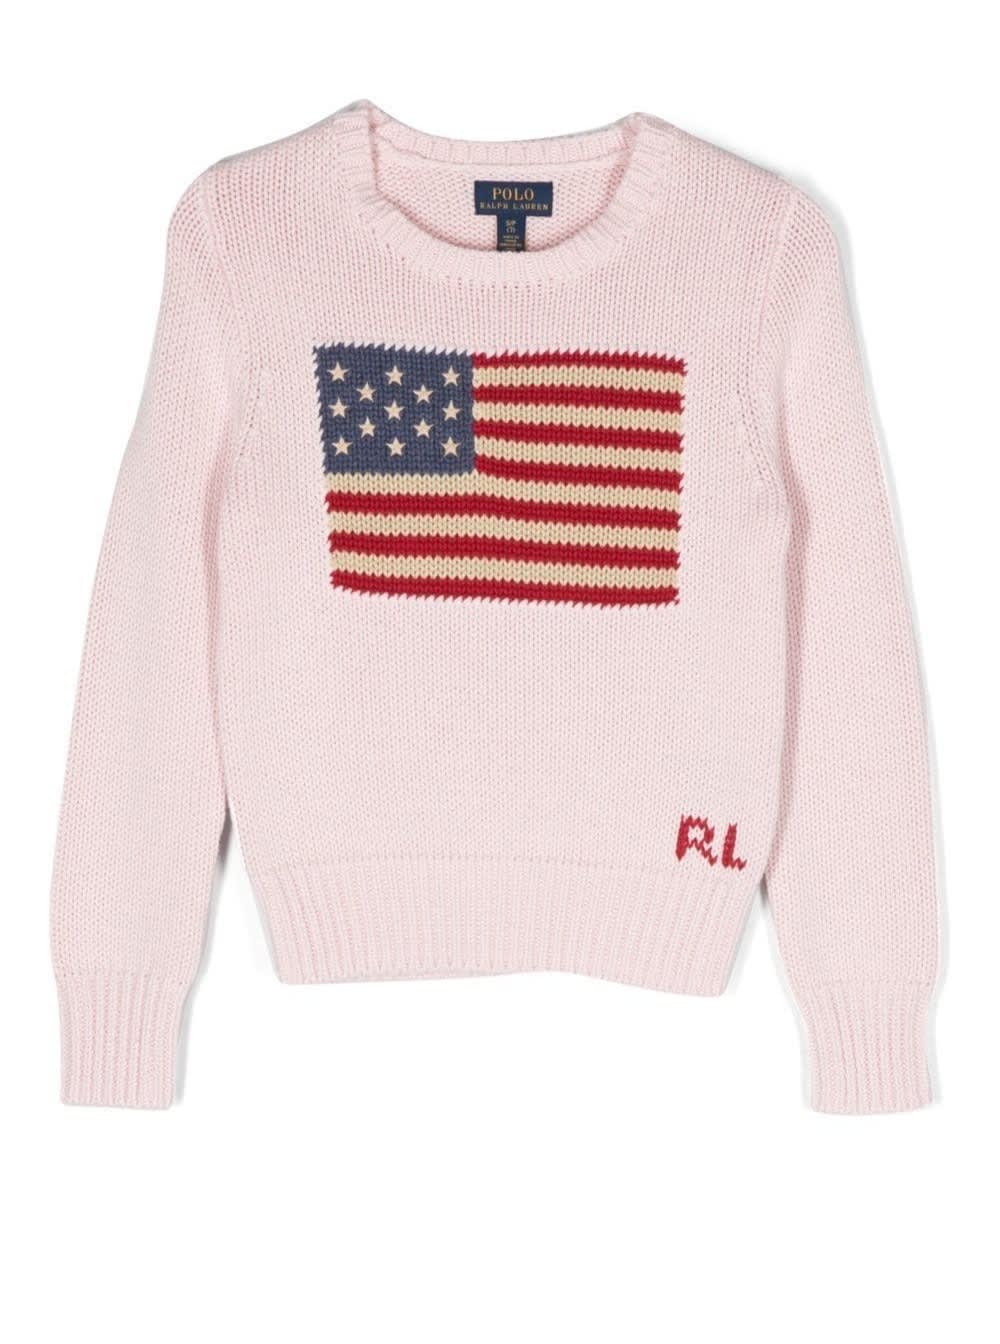 Polo Ralph Lauren American Swt-tops-sweater